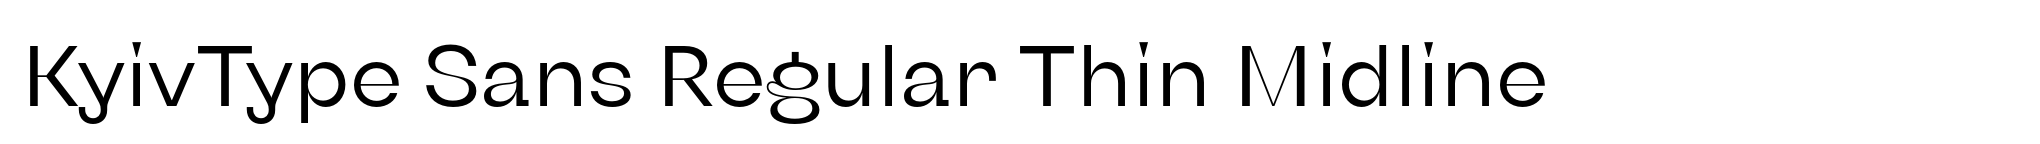 KyivType Sans Regular Thin Midline image